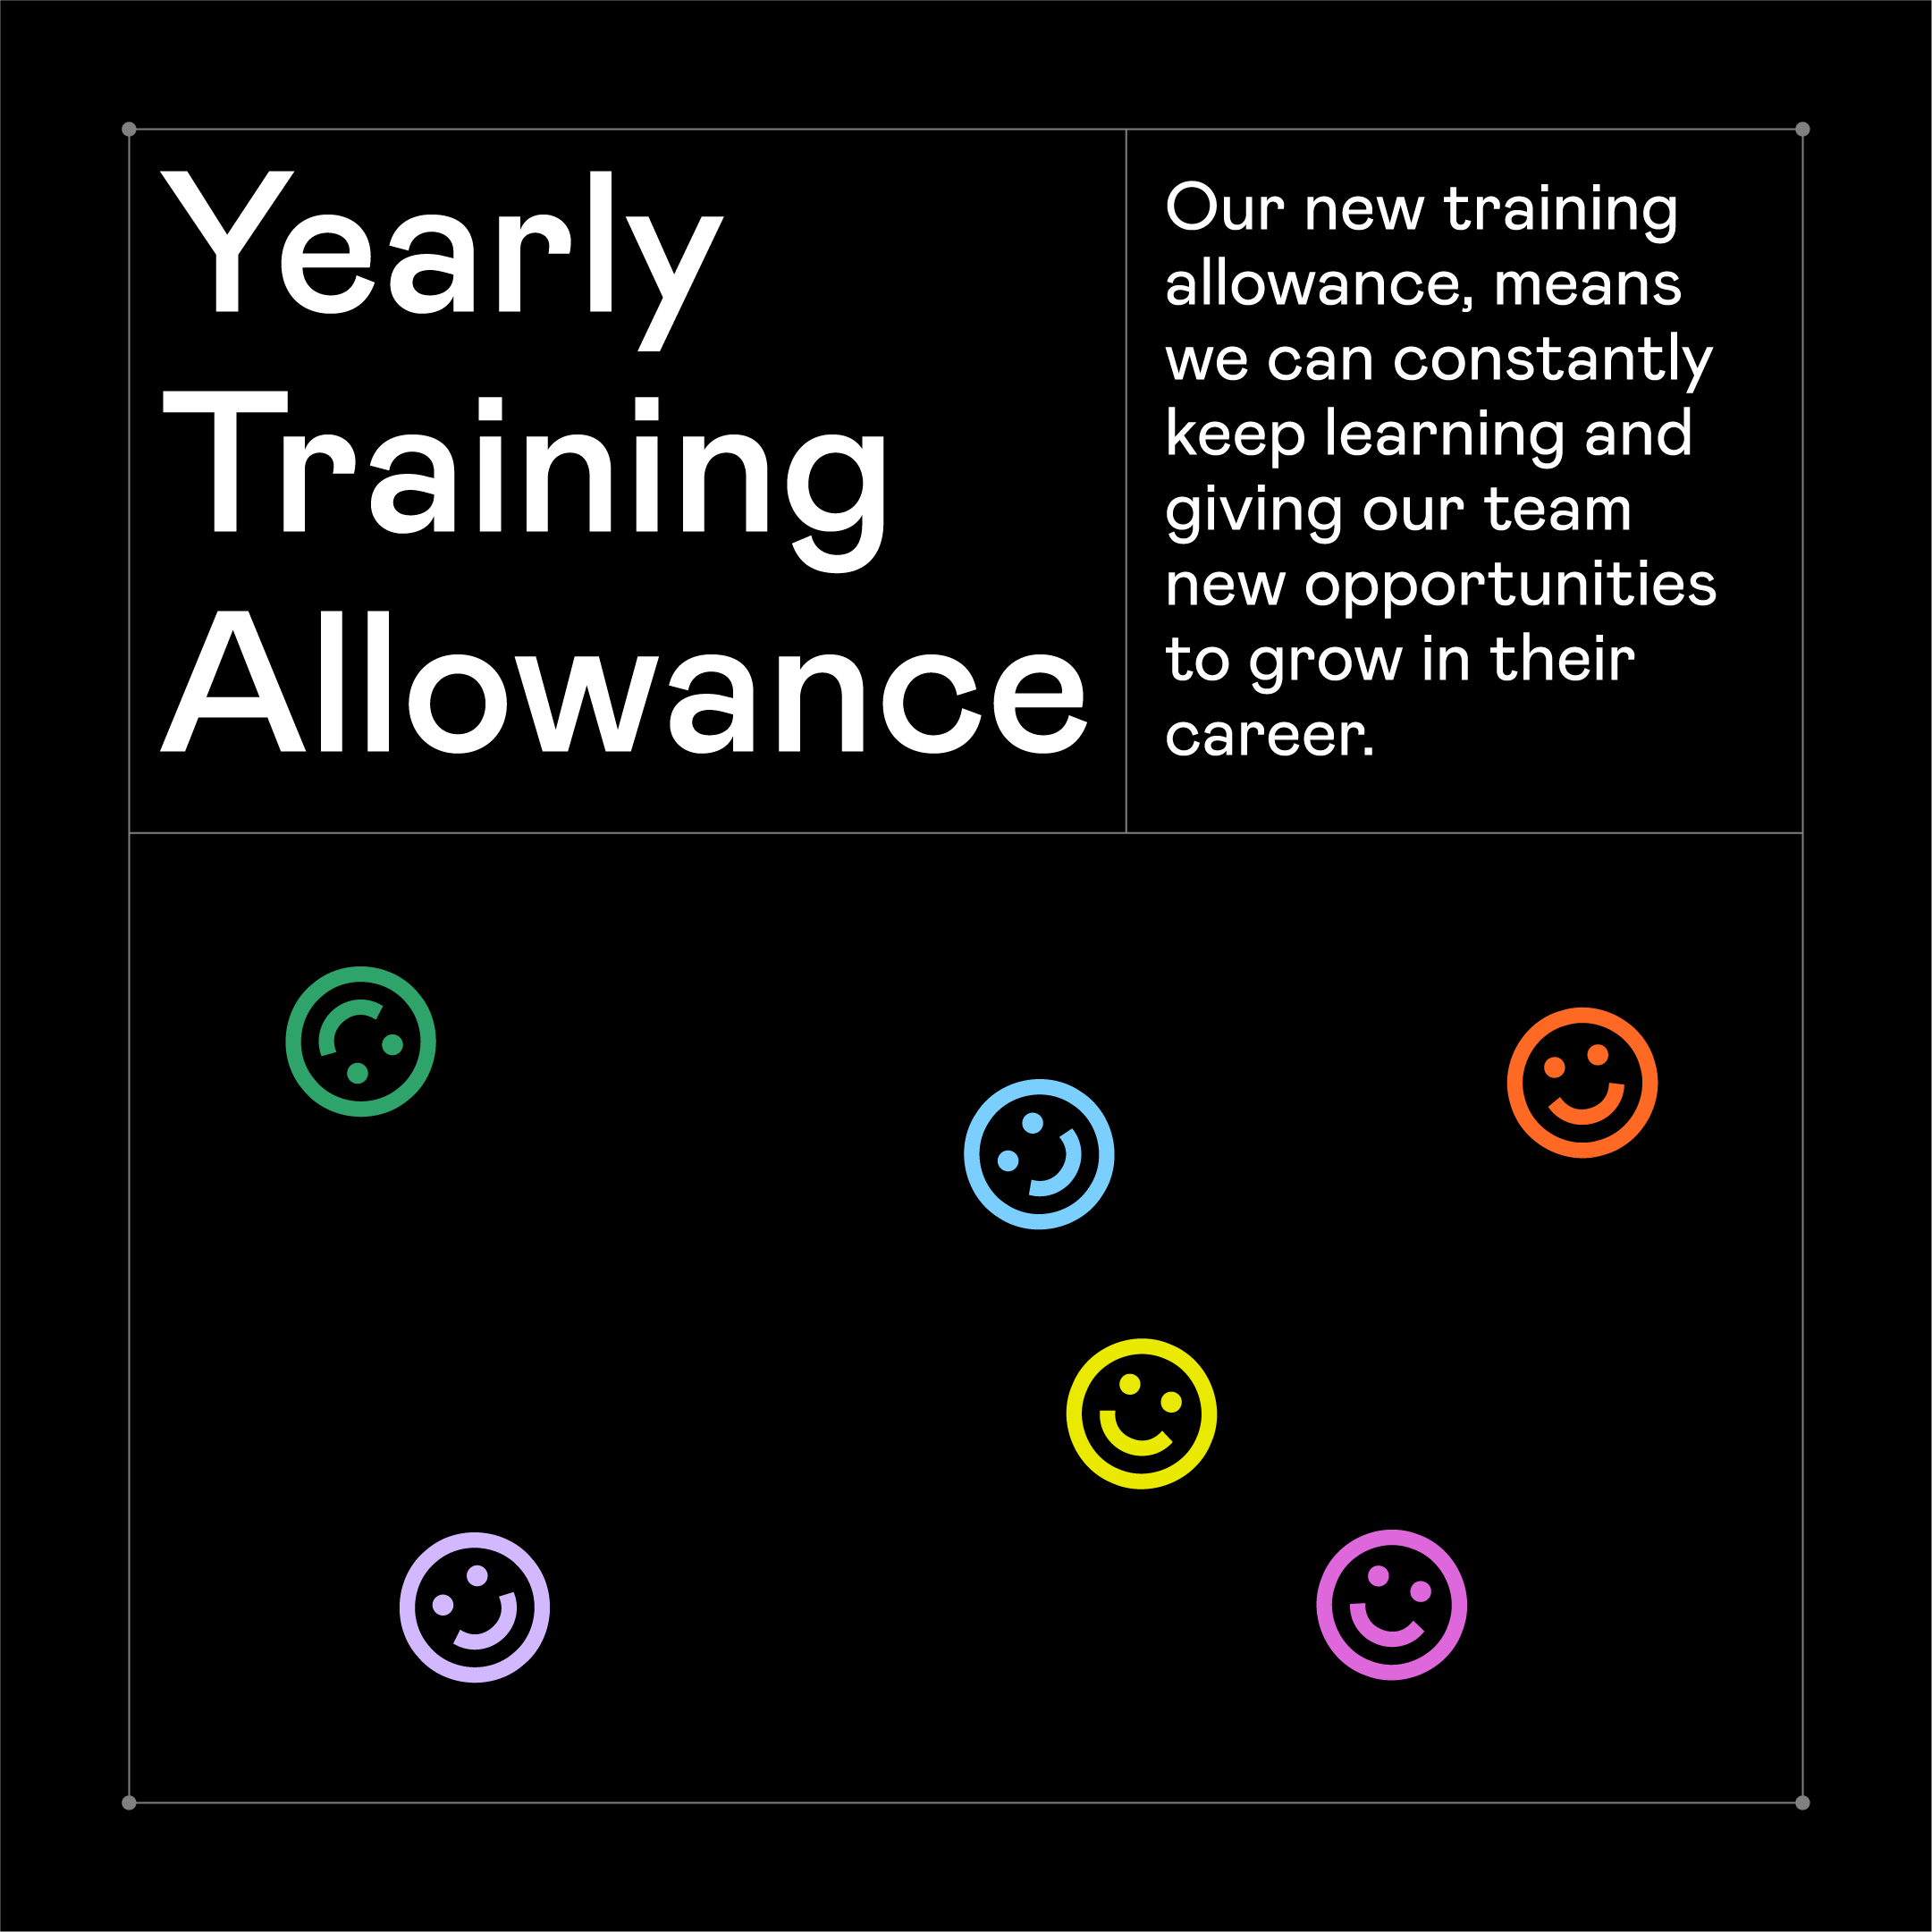 Yearly Training Allowance